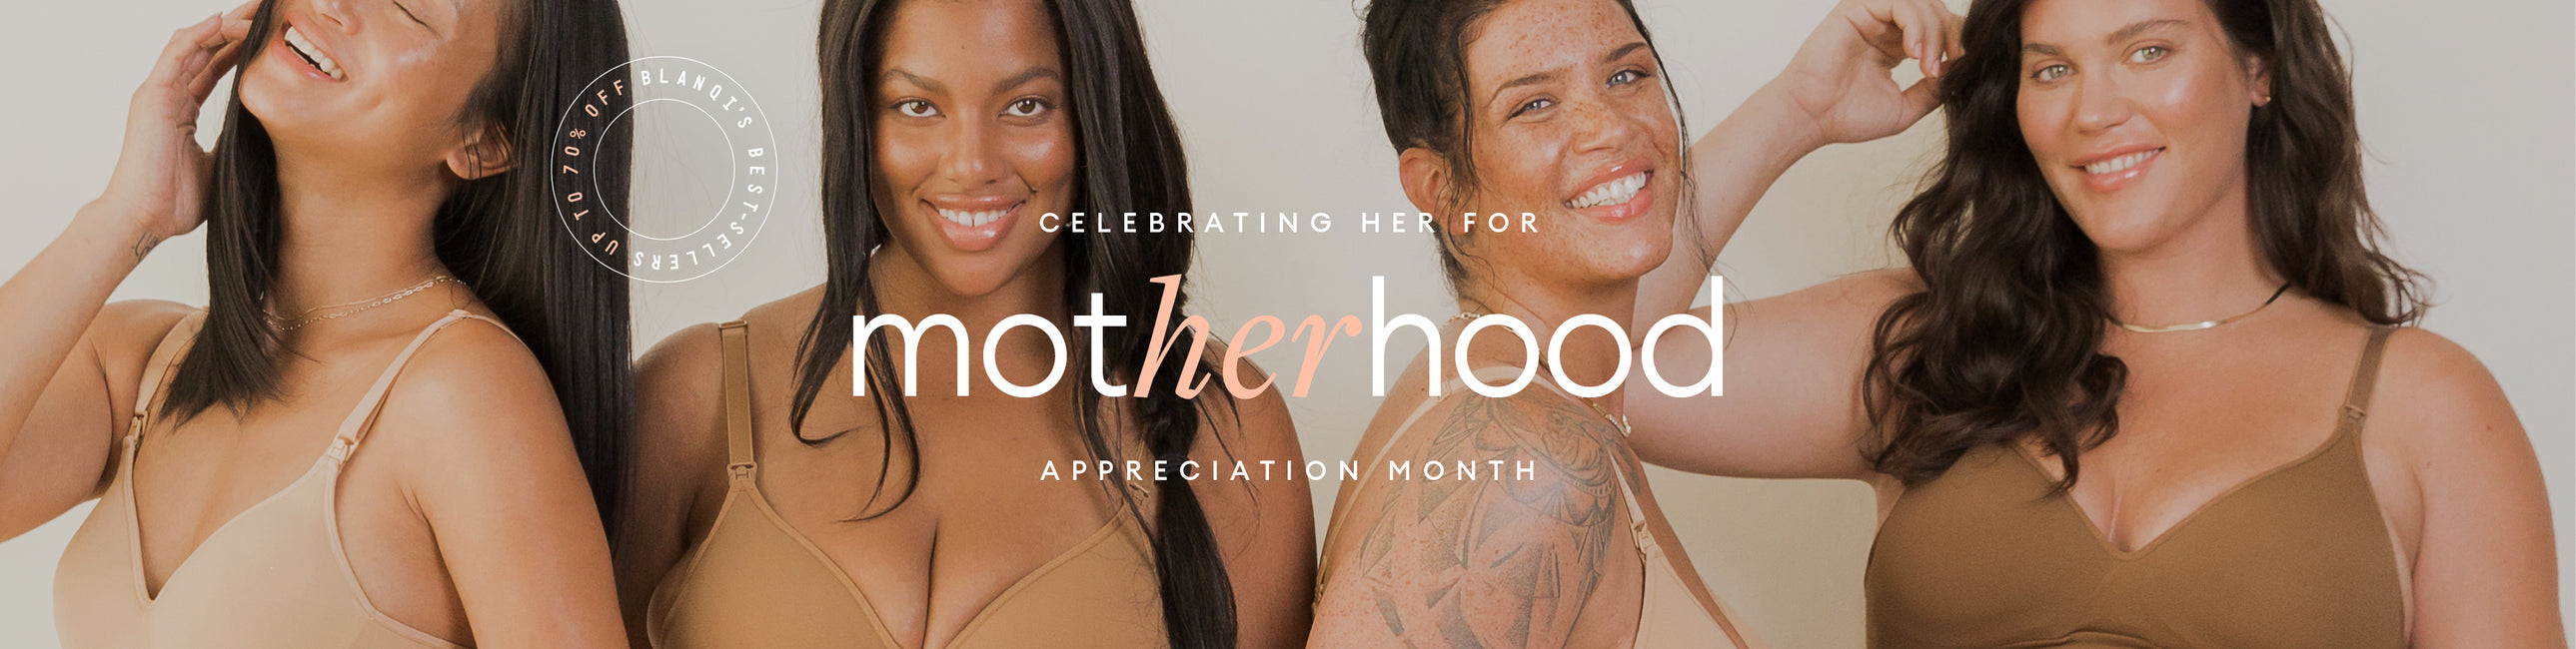 Motherhood Appreciation Month Sale